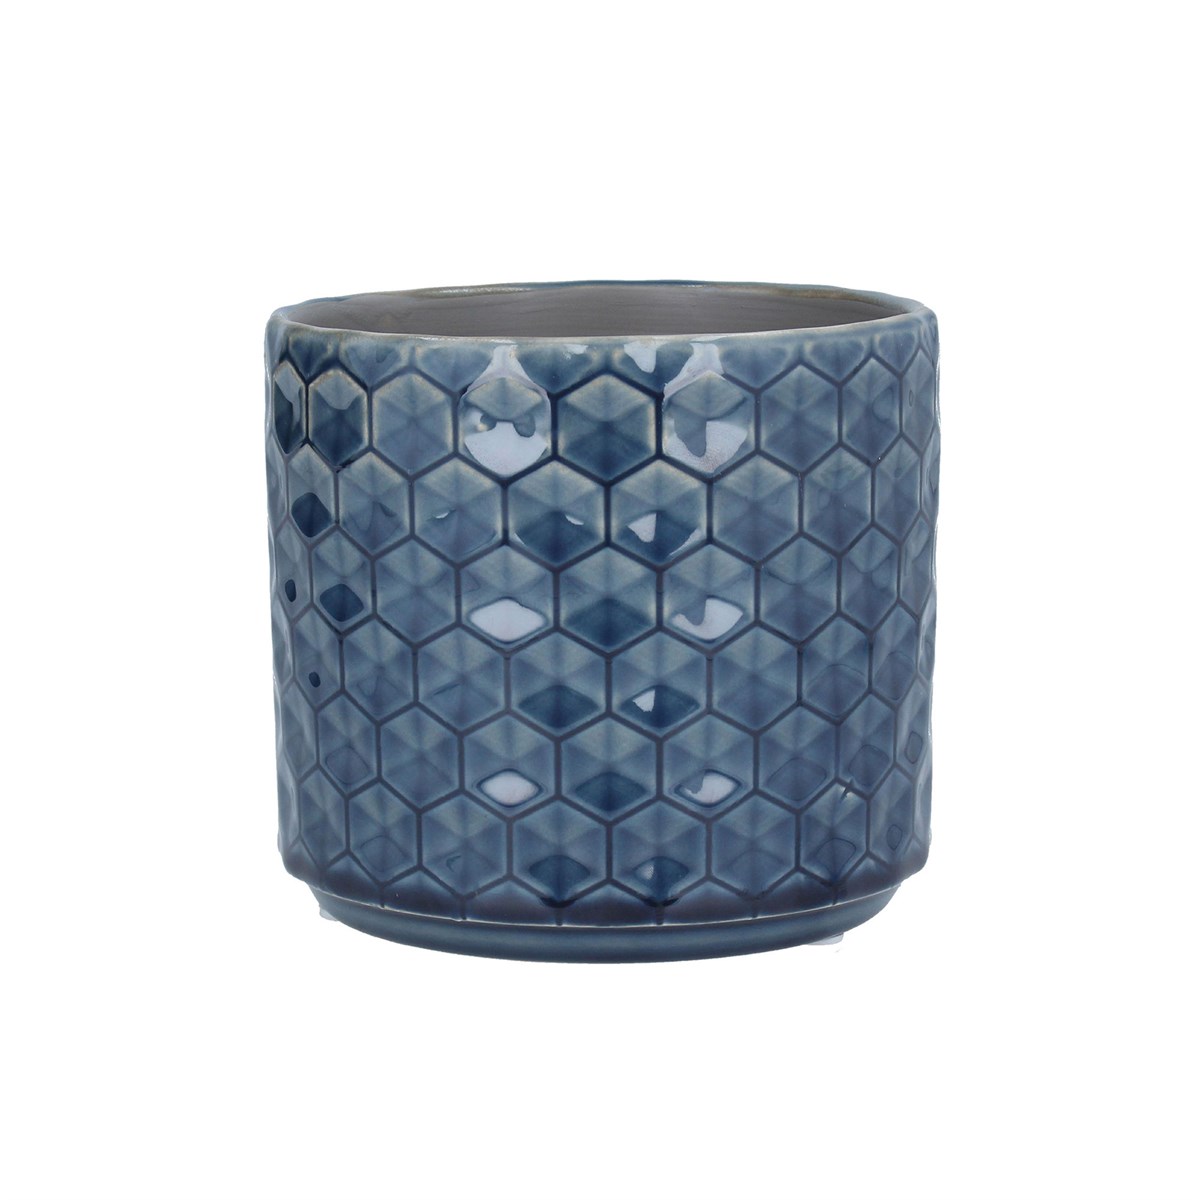 Gisela Graham Navy Honeycomb Ceramic Pot Cover, Small